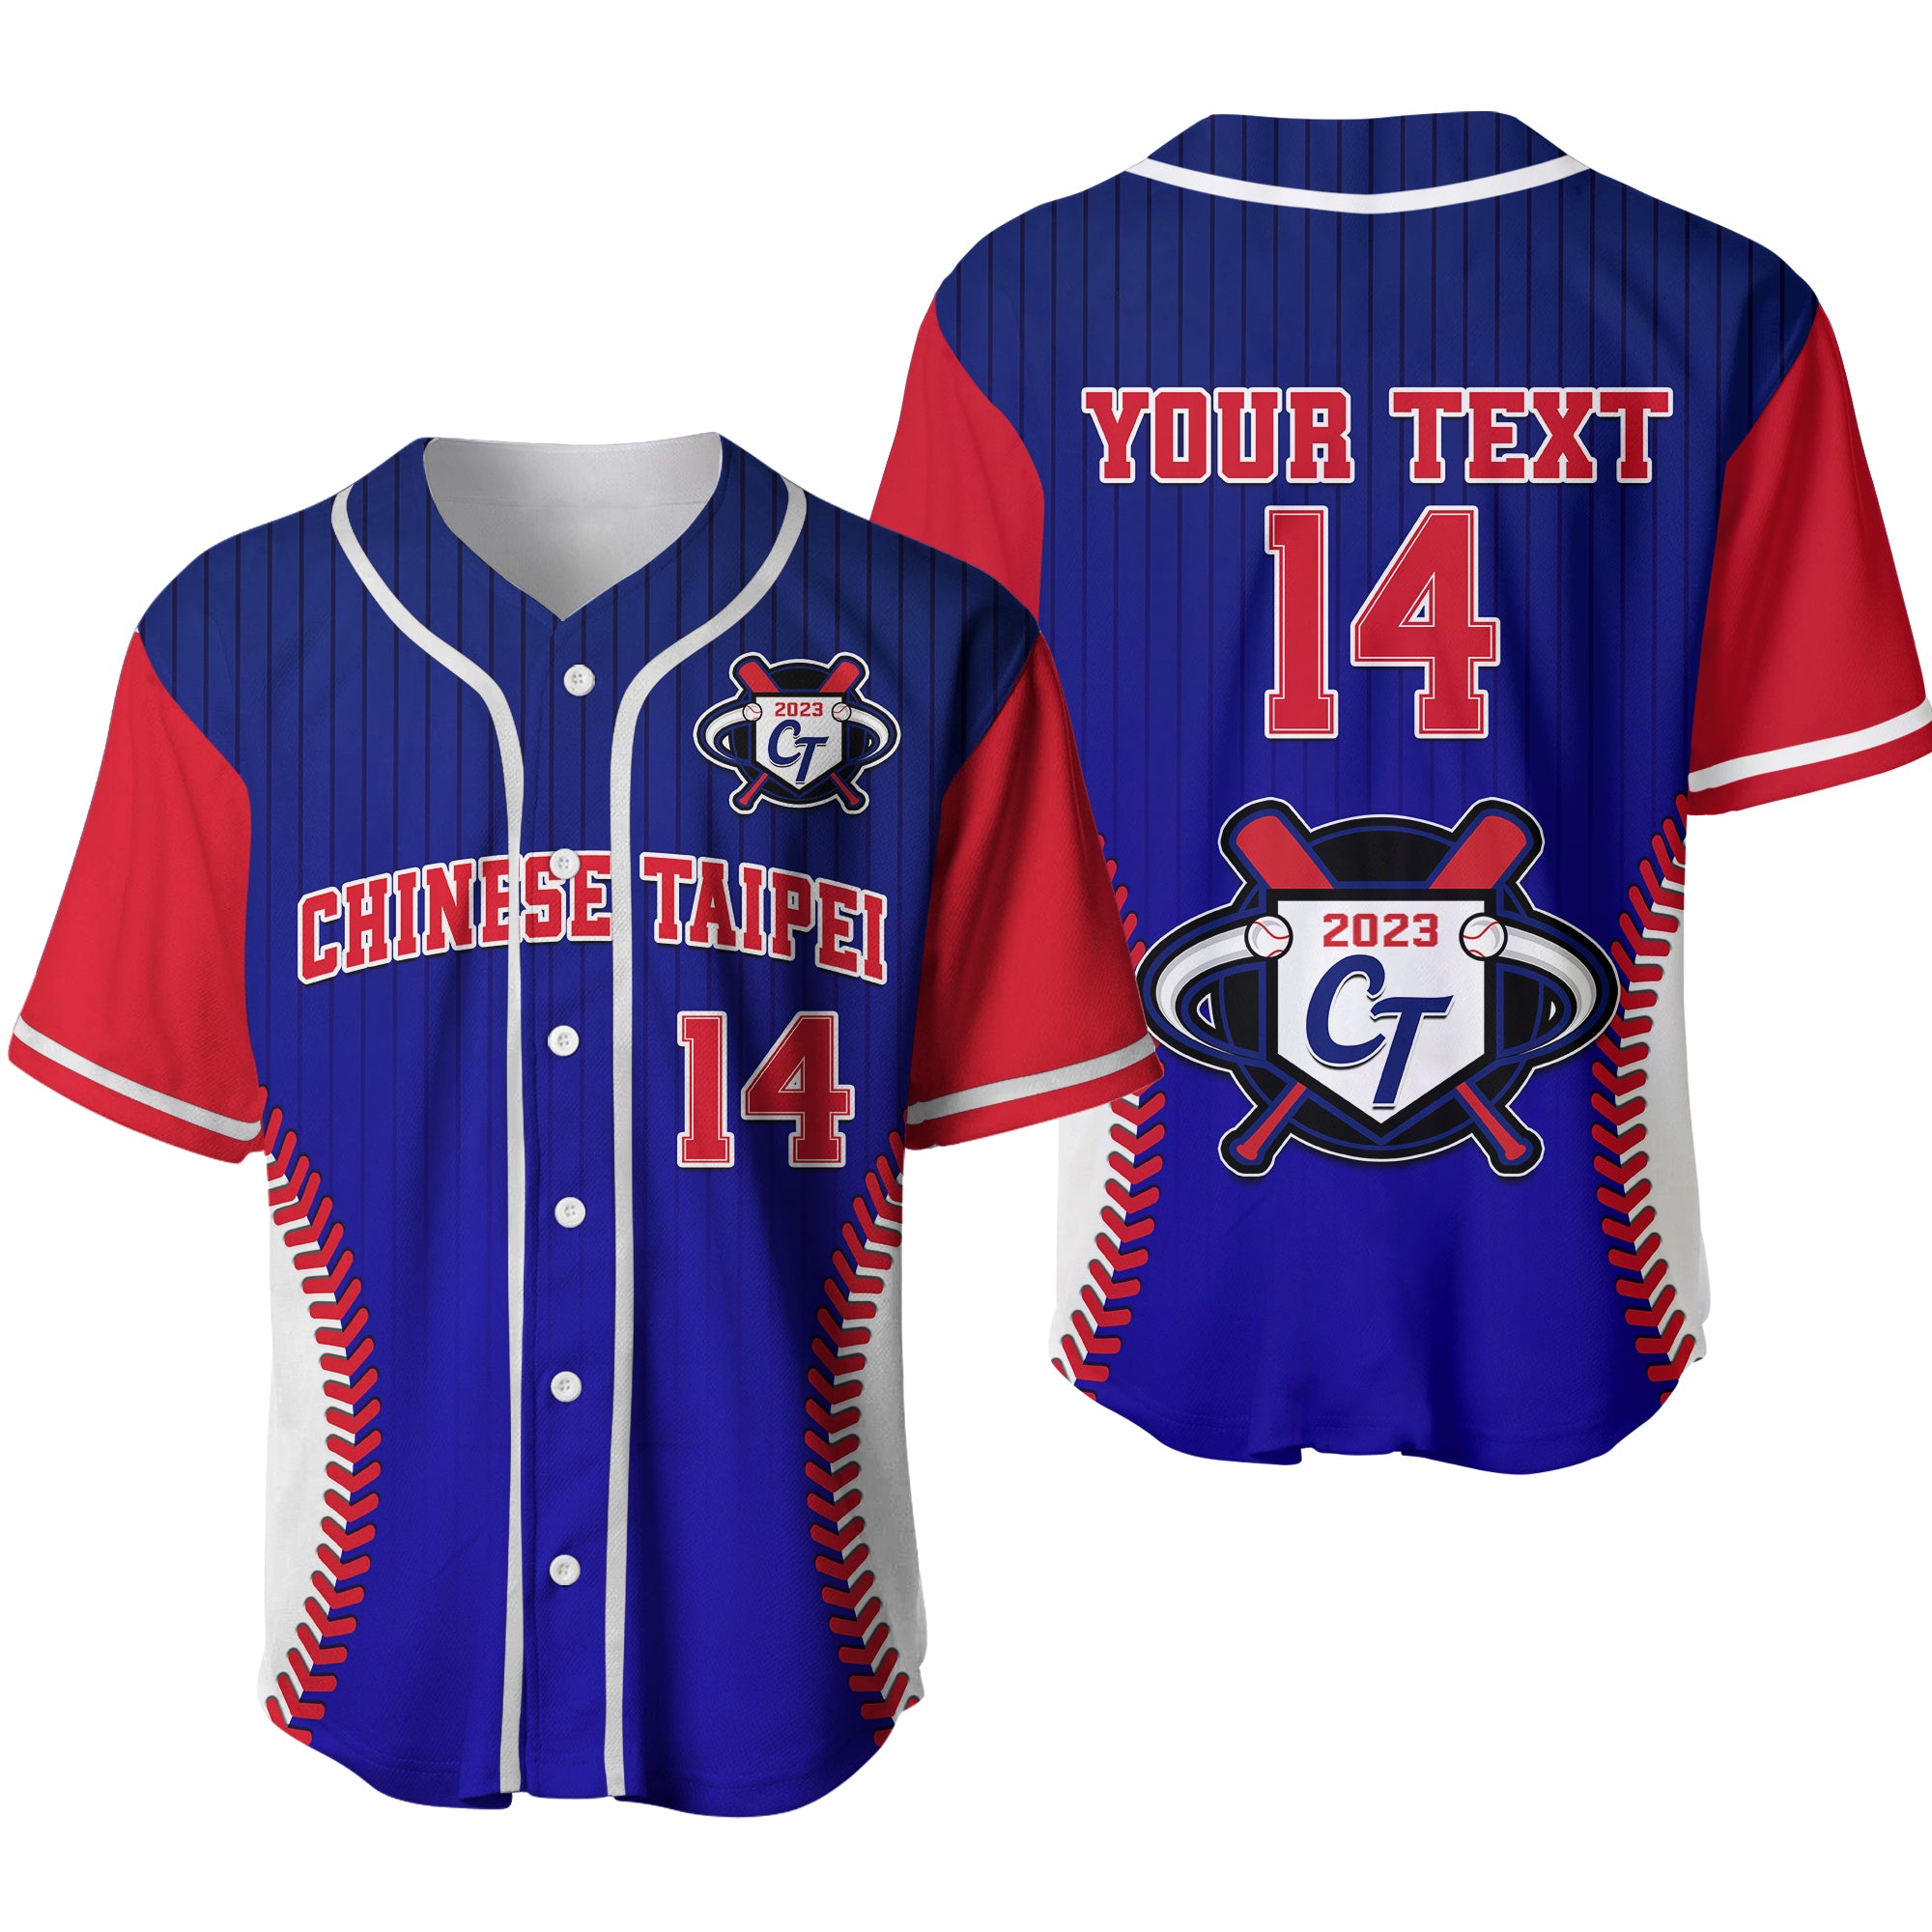 (Custom Text And Number) Chinese Taipei 2023 Baseball Jersey Baseball Ver.02 LT14